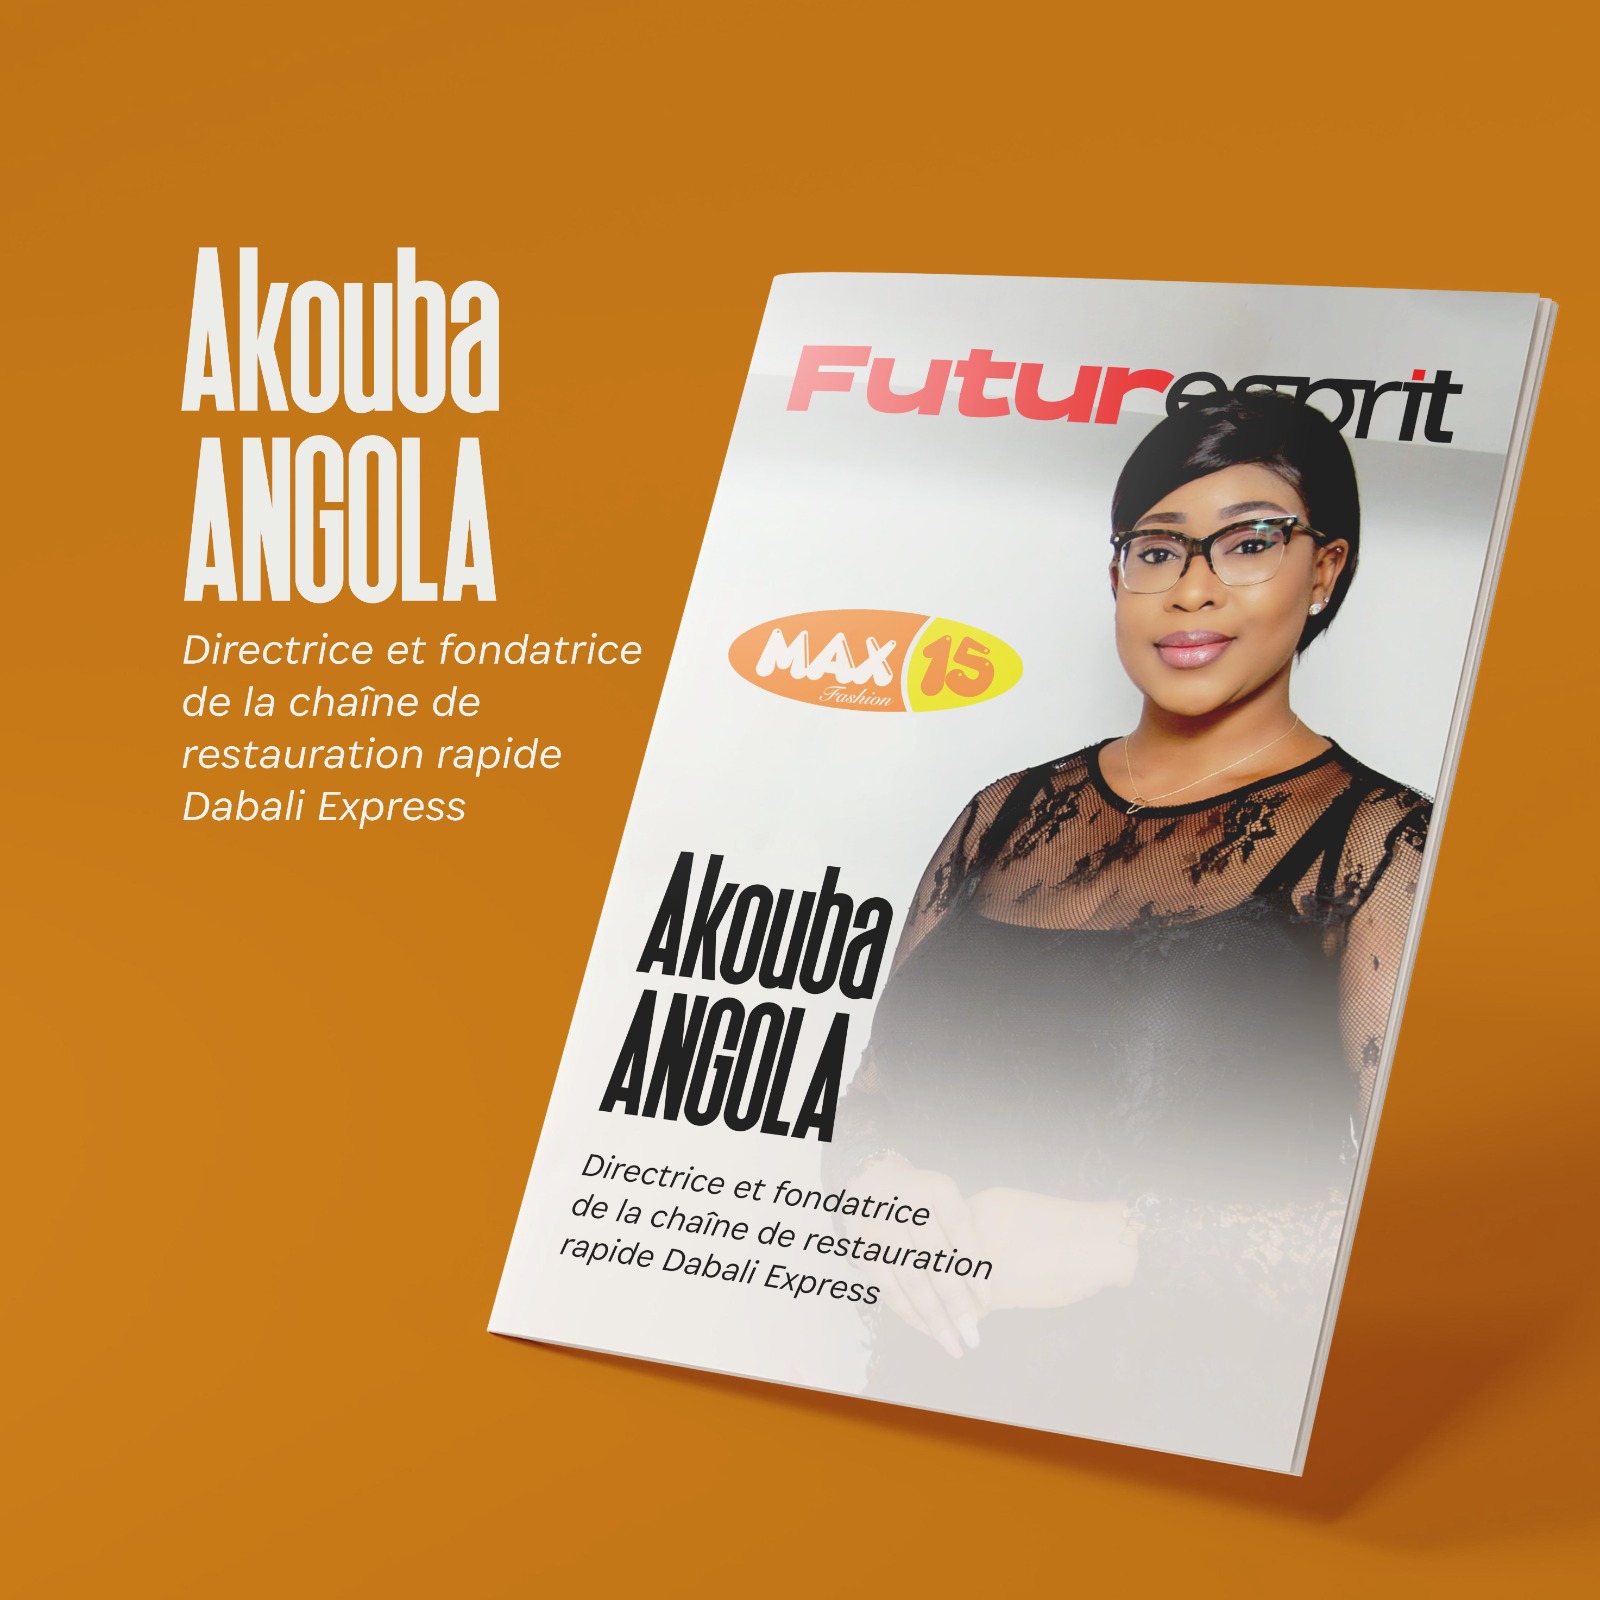 Akouba Angola: La pionnière du fastfood ivoirien